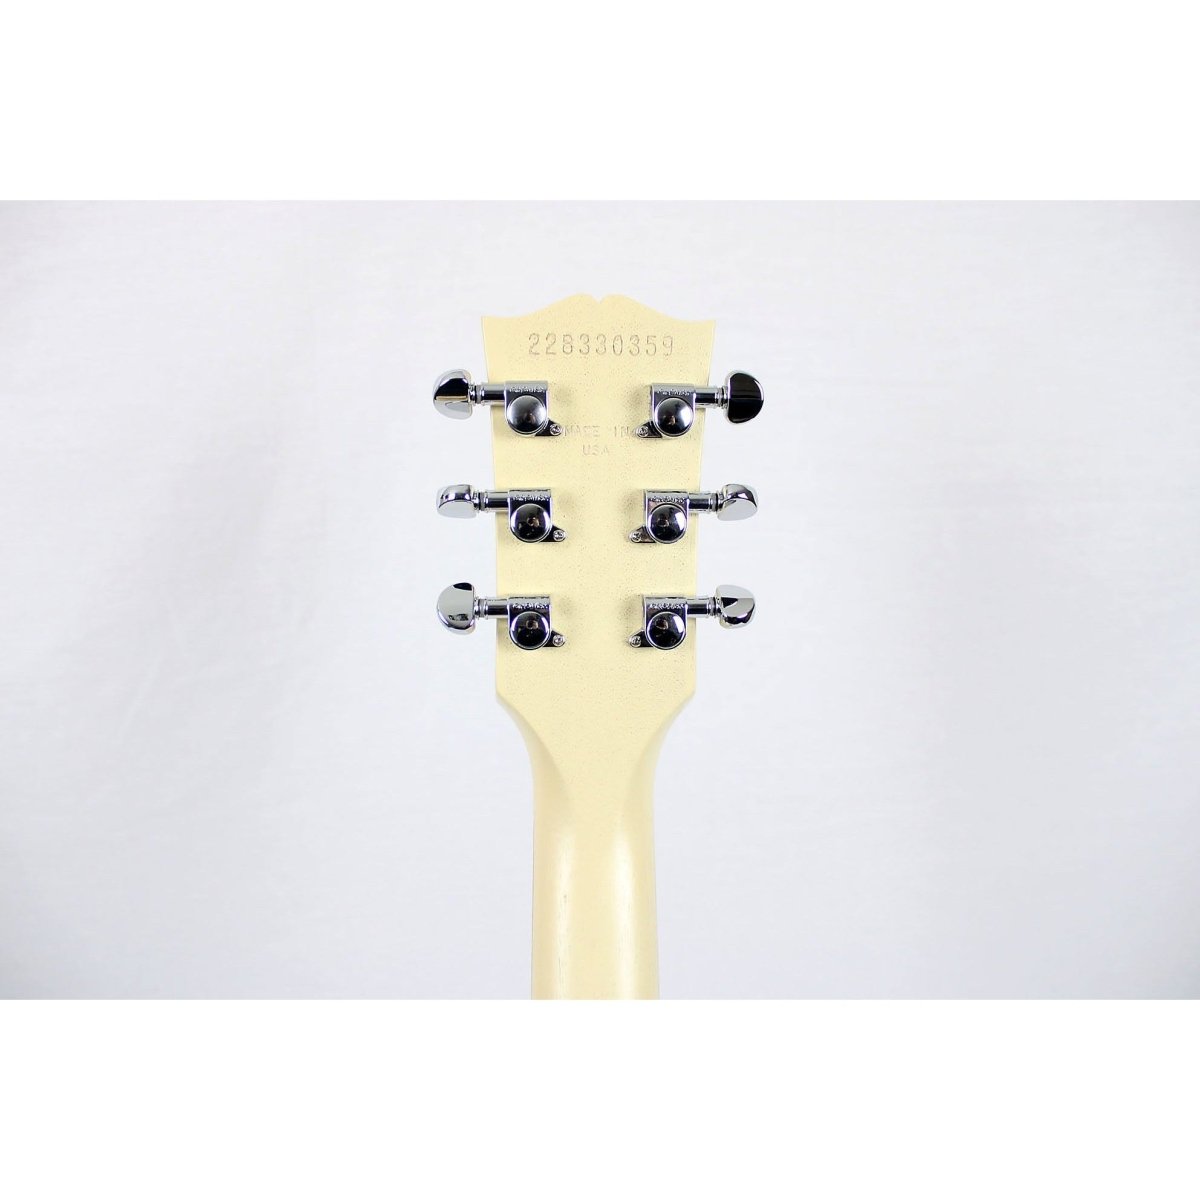 Gibson Les Paul Modern Lite - TV Wheat Satin - Leitz Music-711106136981-LPTRM00WGCH1